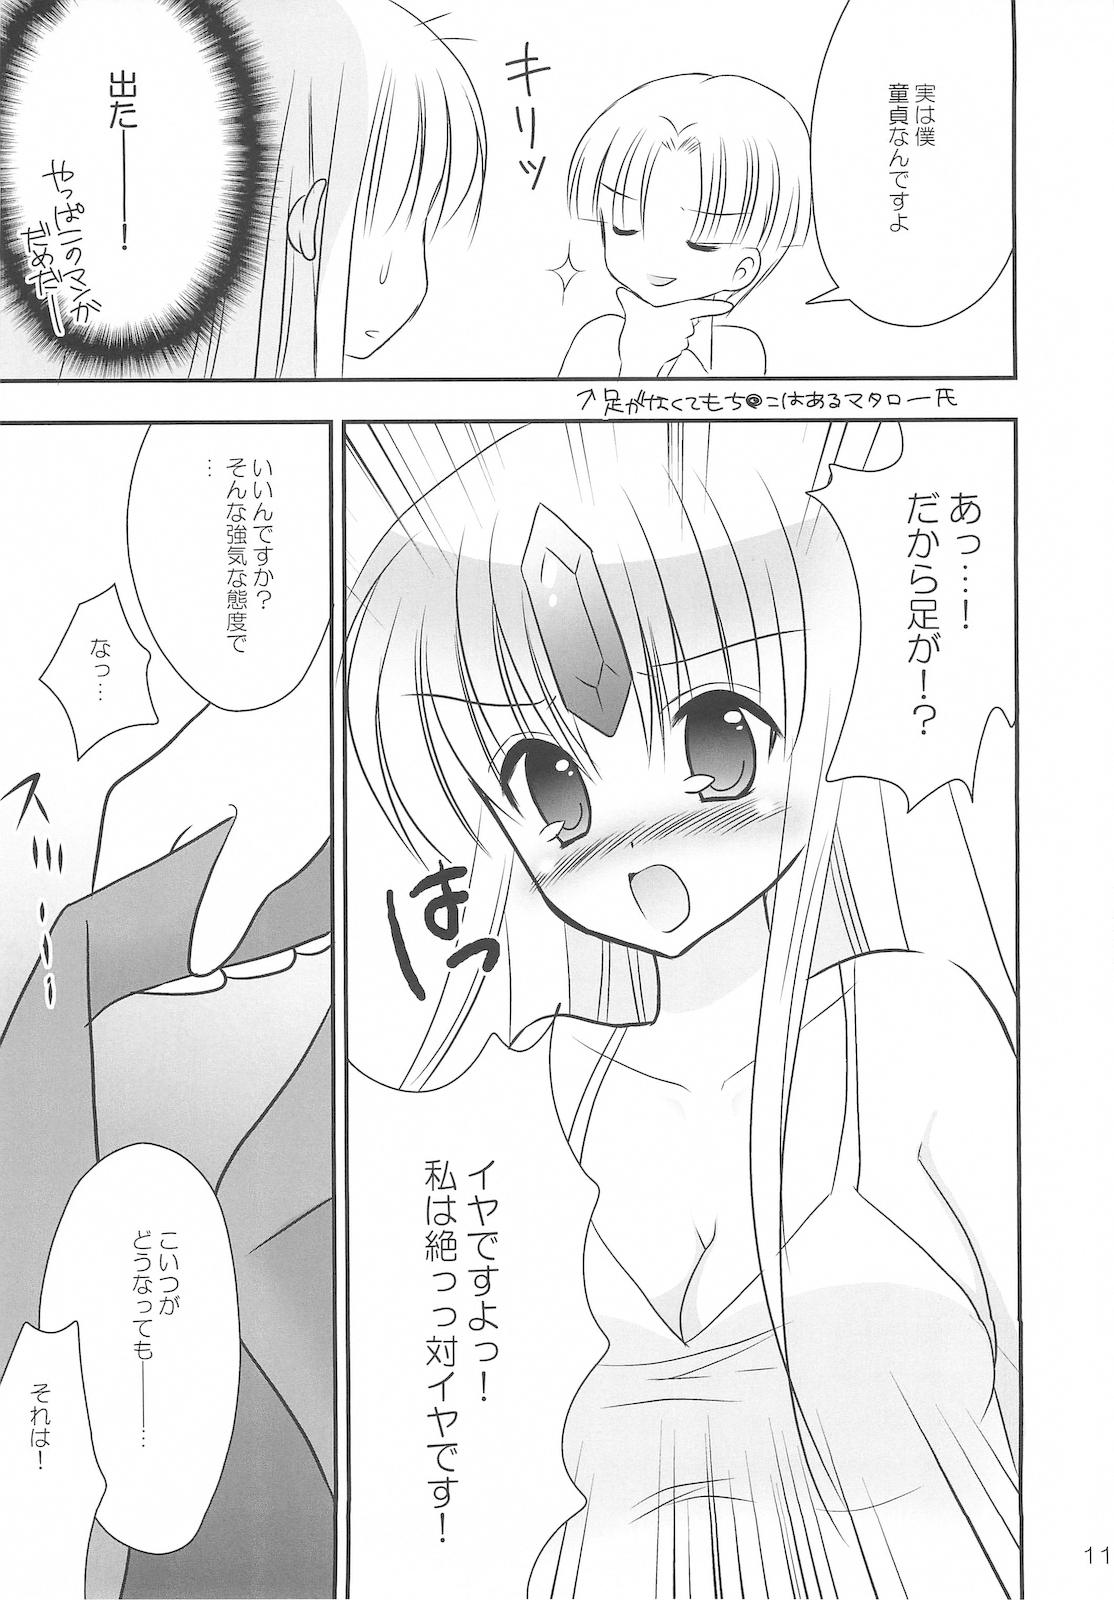 Butthole Fairy Rose 4 - Seiken densetsu 3 Climax - Page 11